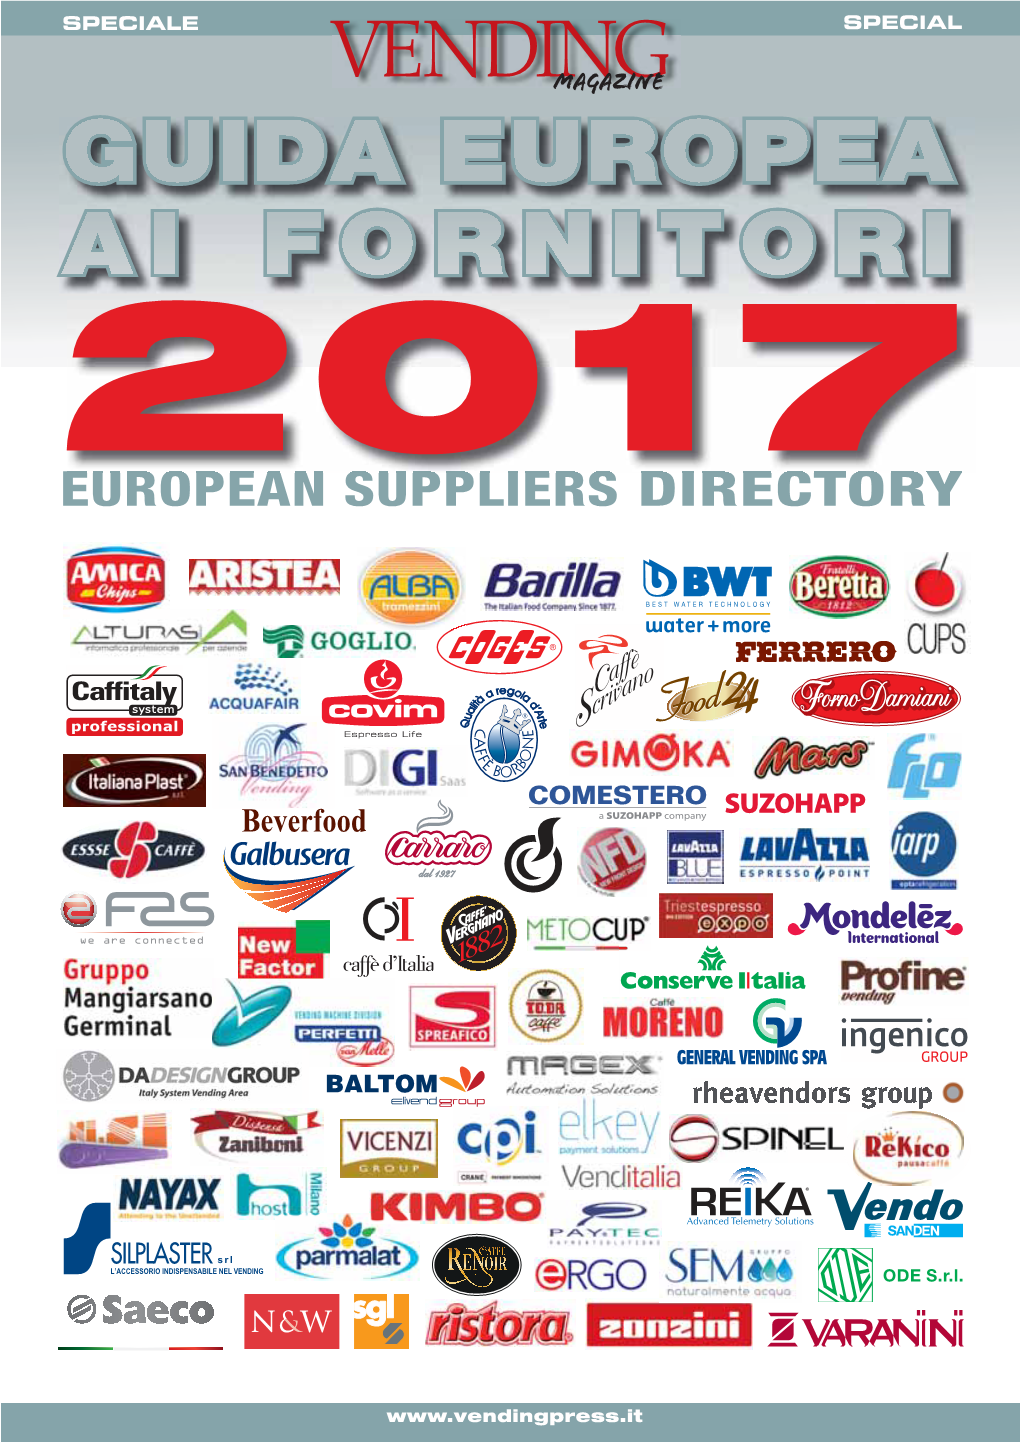 European Suppliers Directory